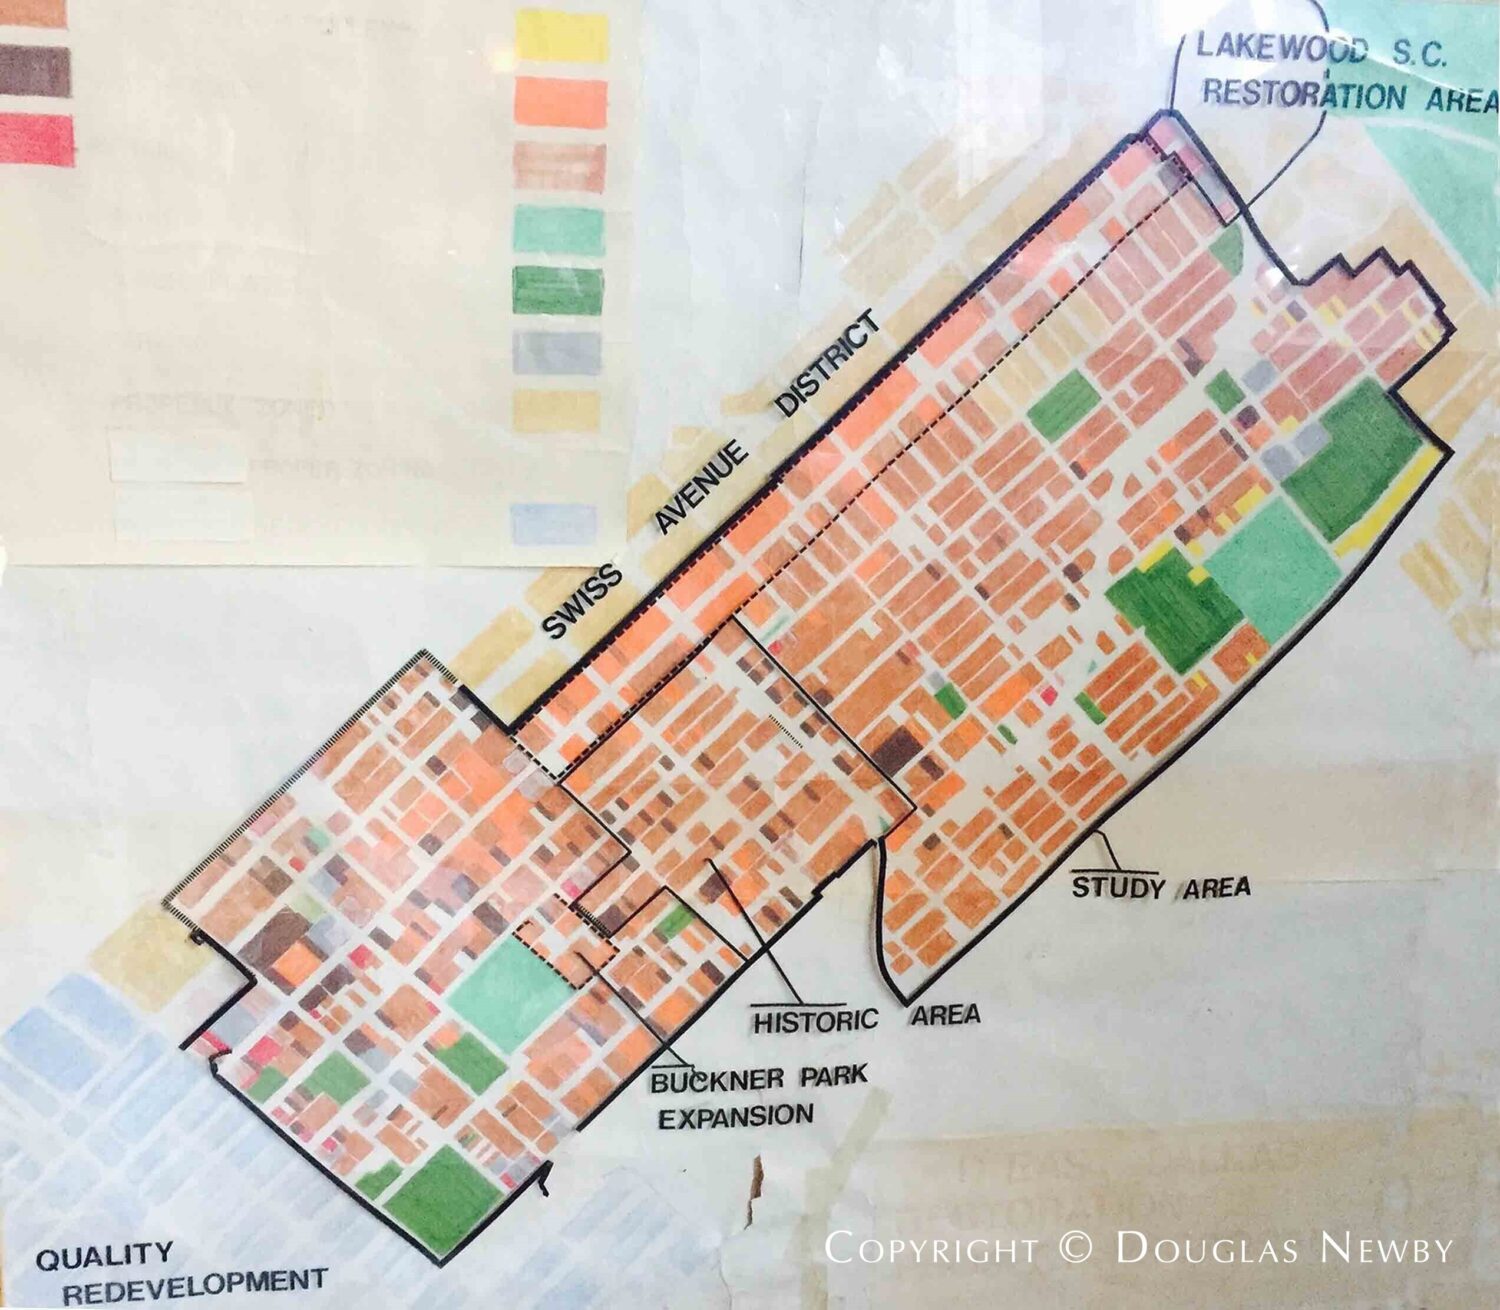 ForwardDallas upzoning could initiate deterioration of neighborhoods.